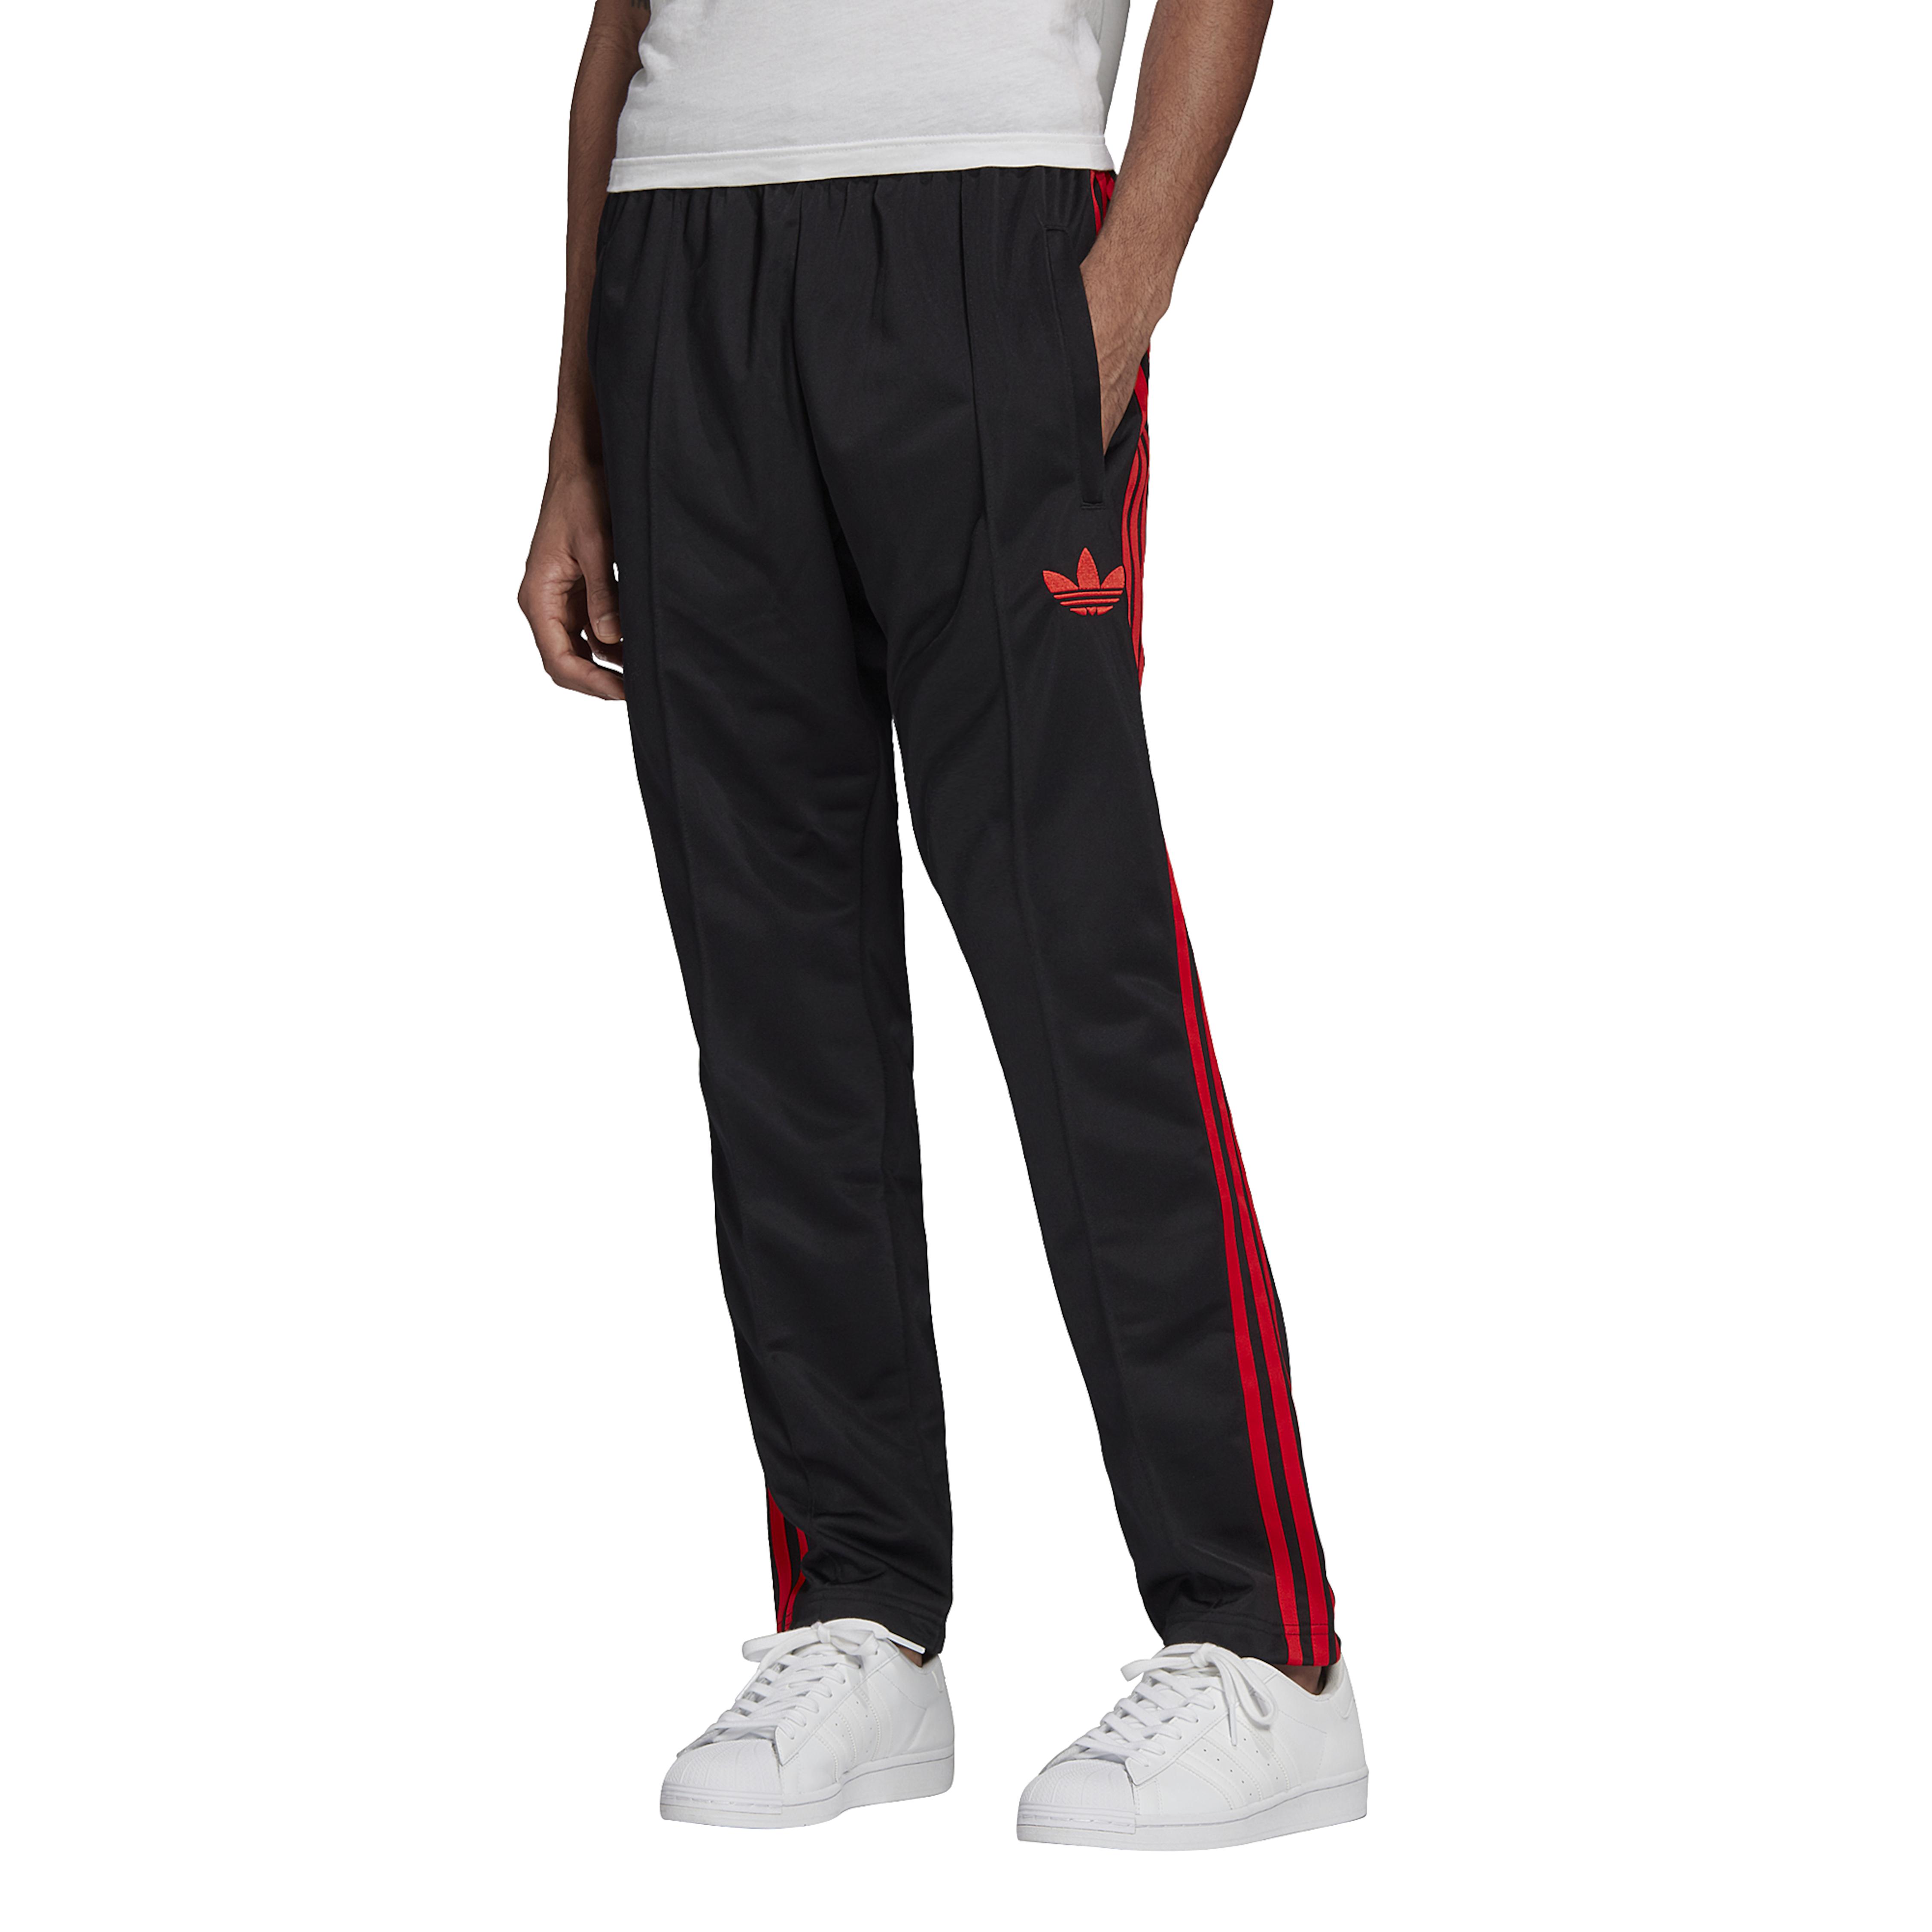 adidas Originals Synthetic Run Dmc Superstar Track Pants in Black/Red